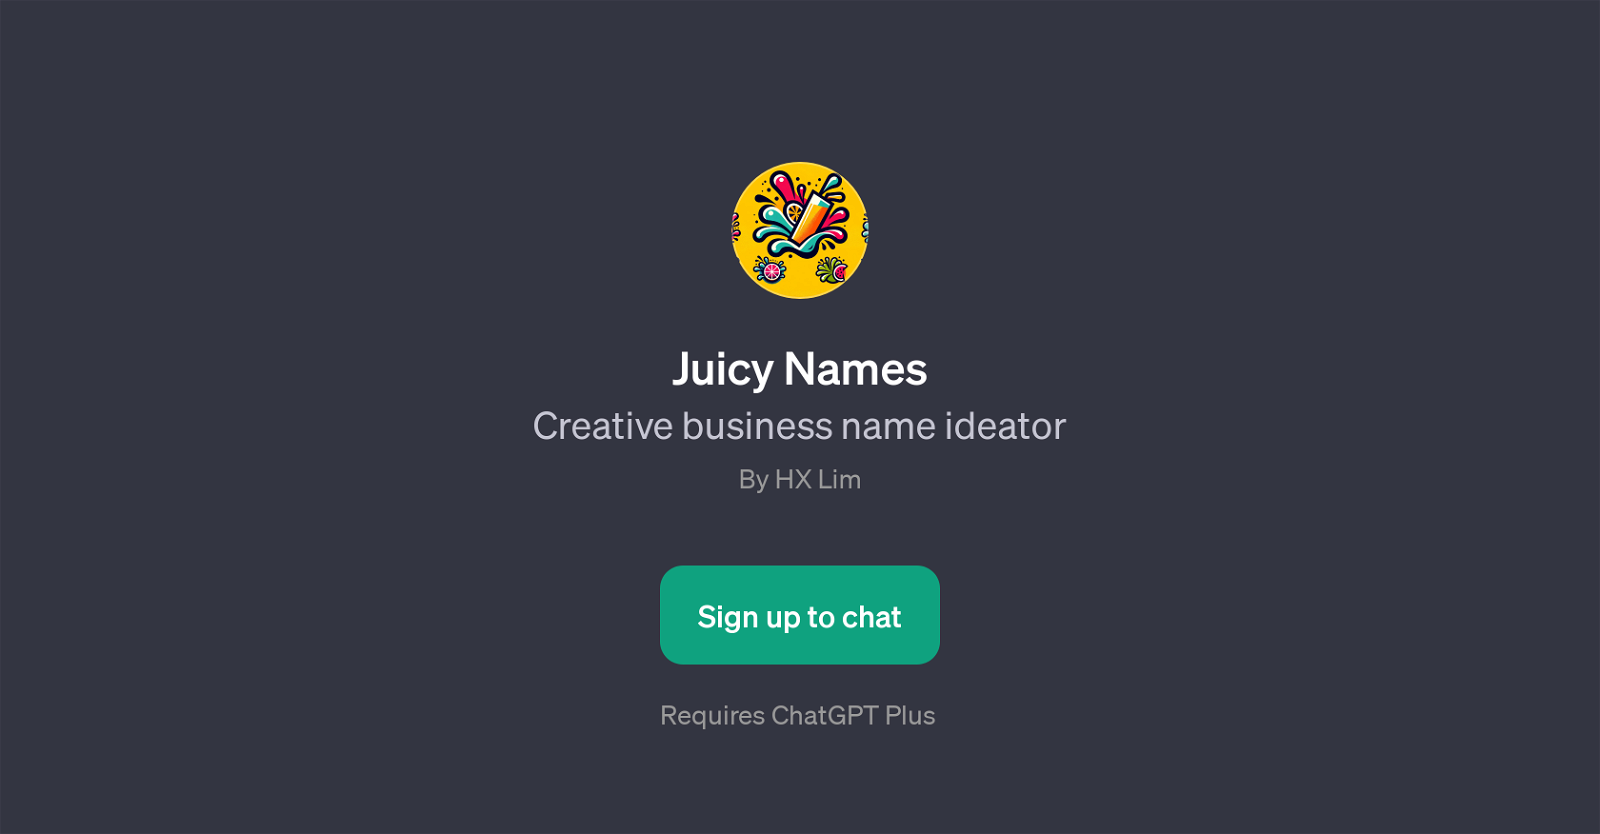 Juicy Names website